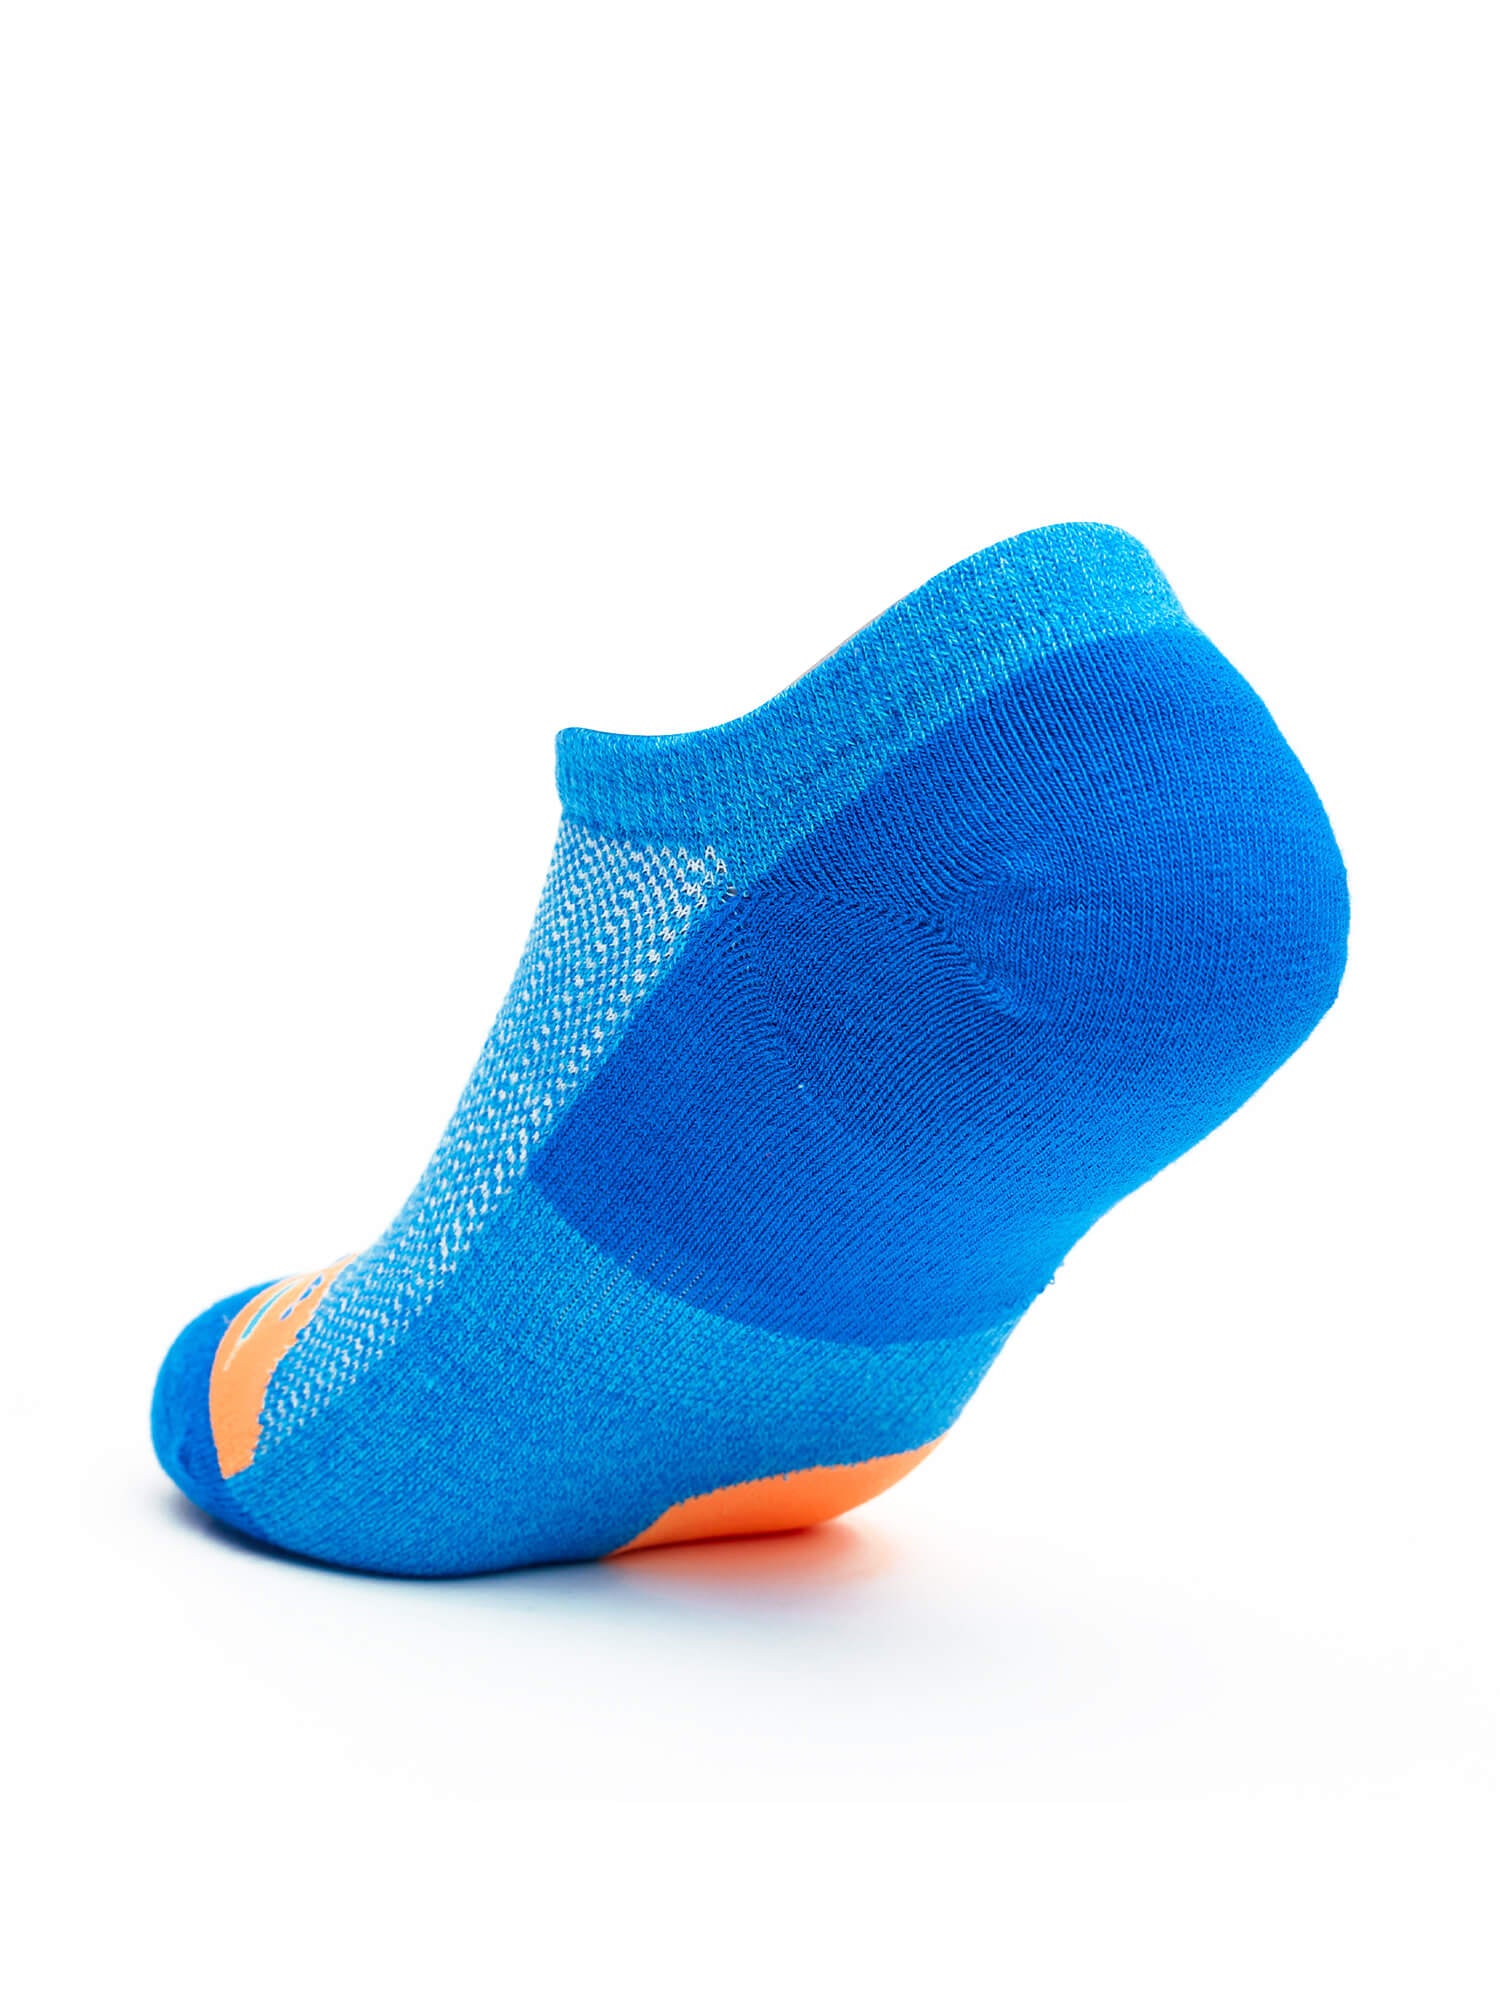 Heel of Thorlos Experia Repreve No Show Liner Socks in Blue